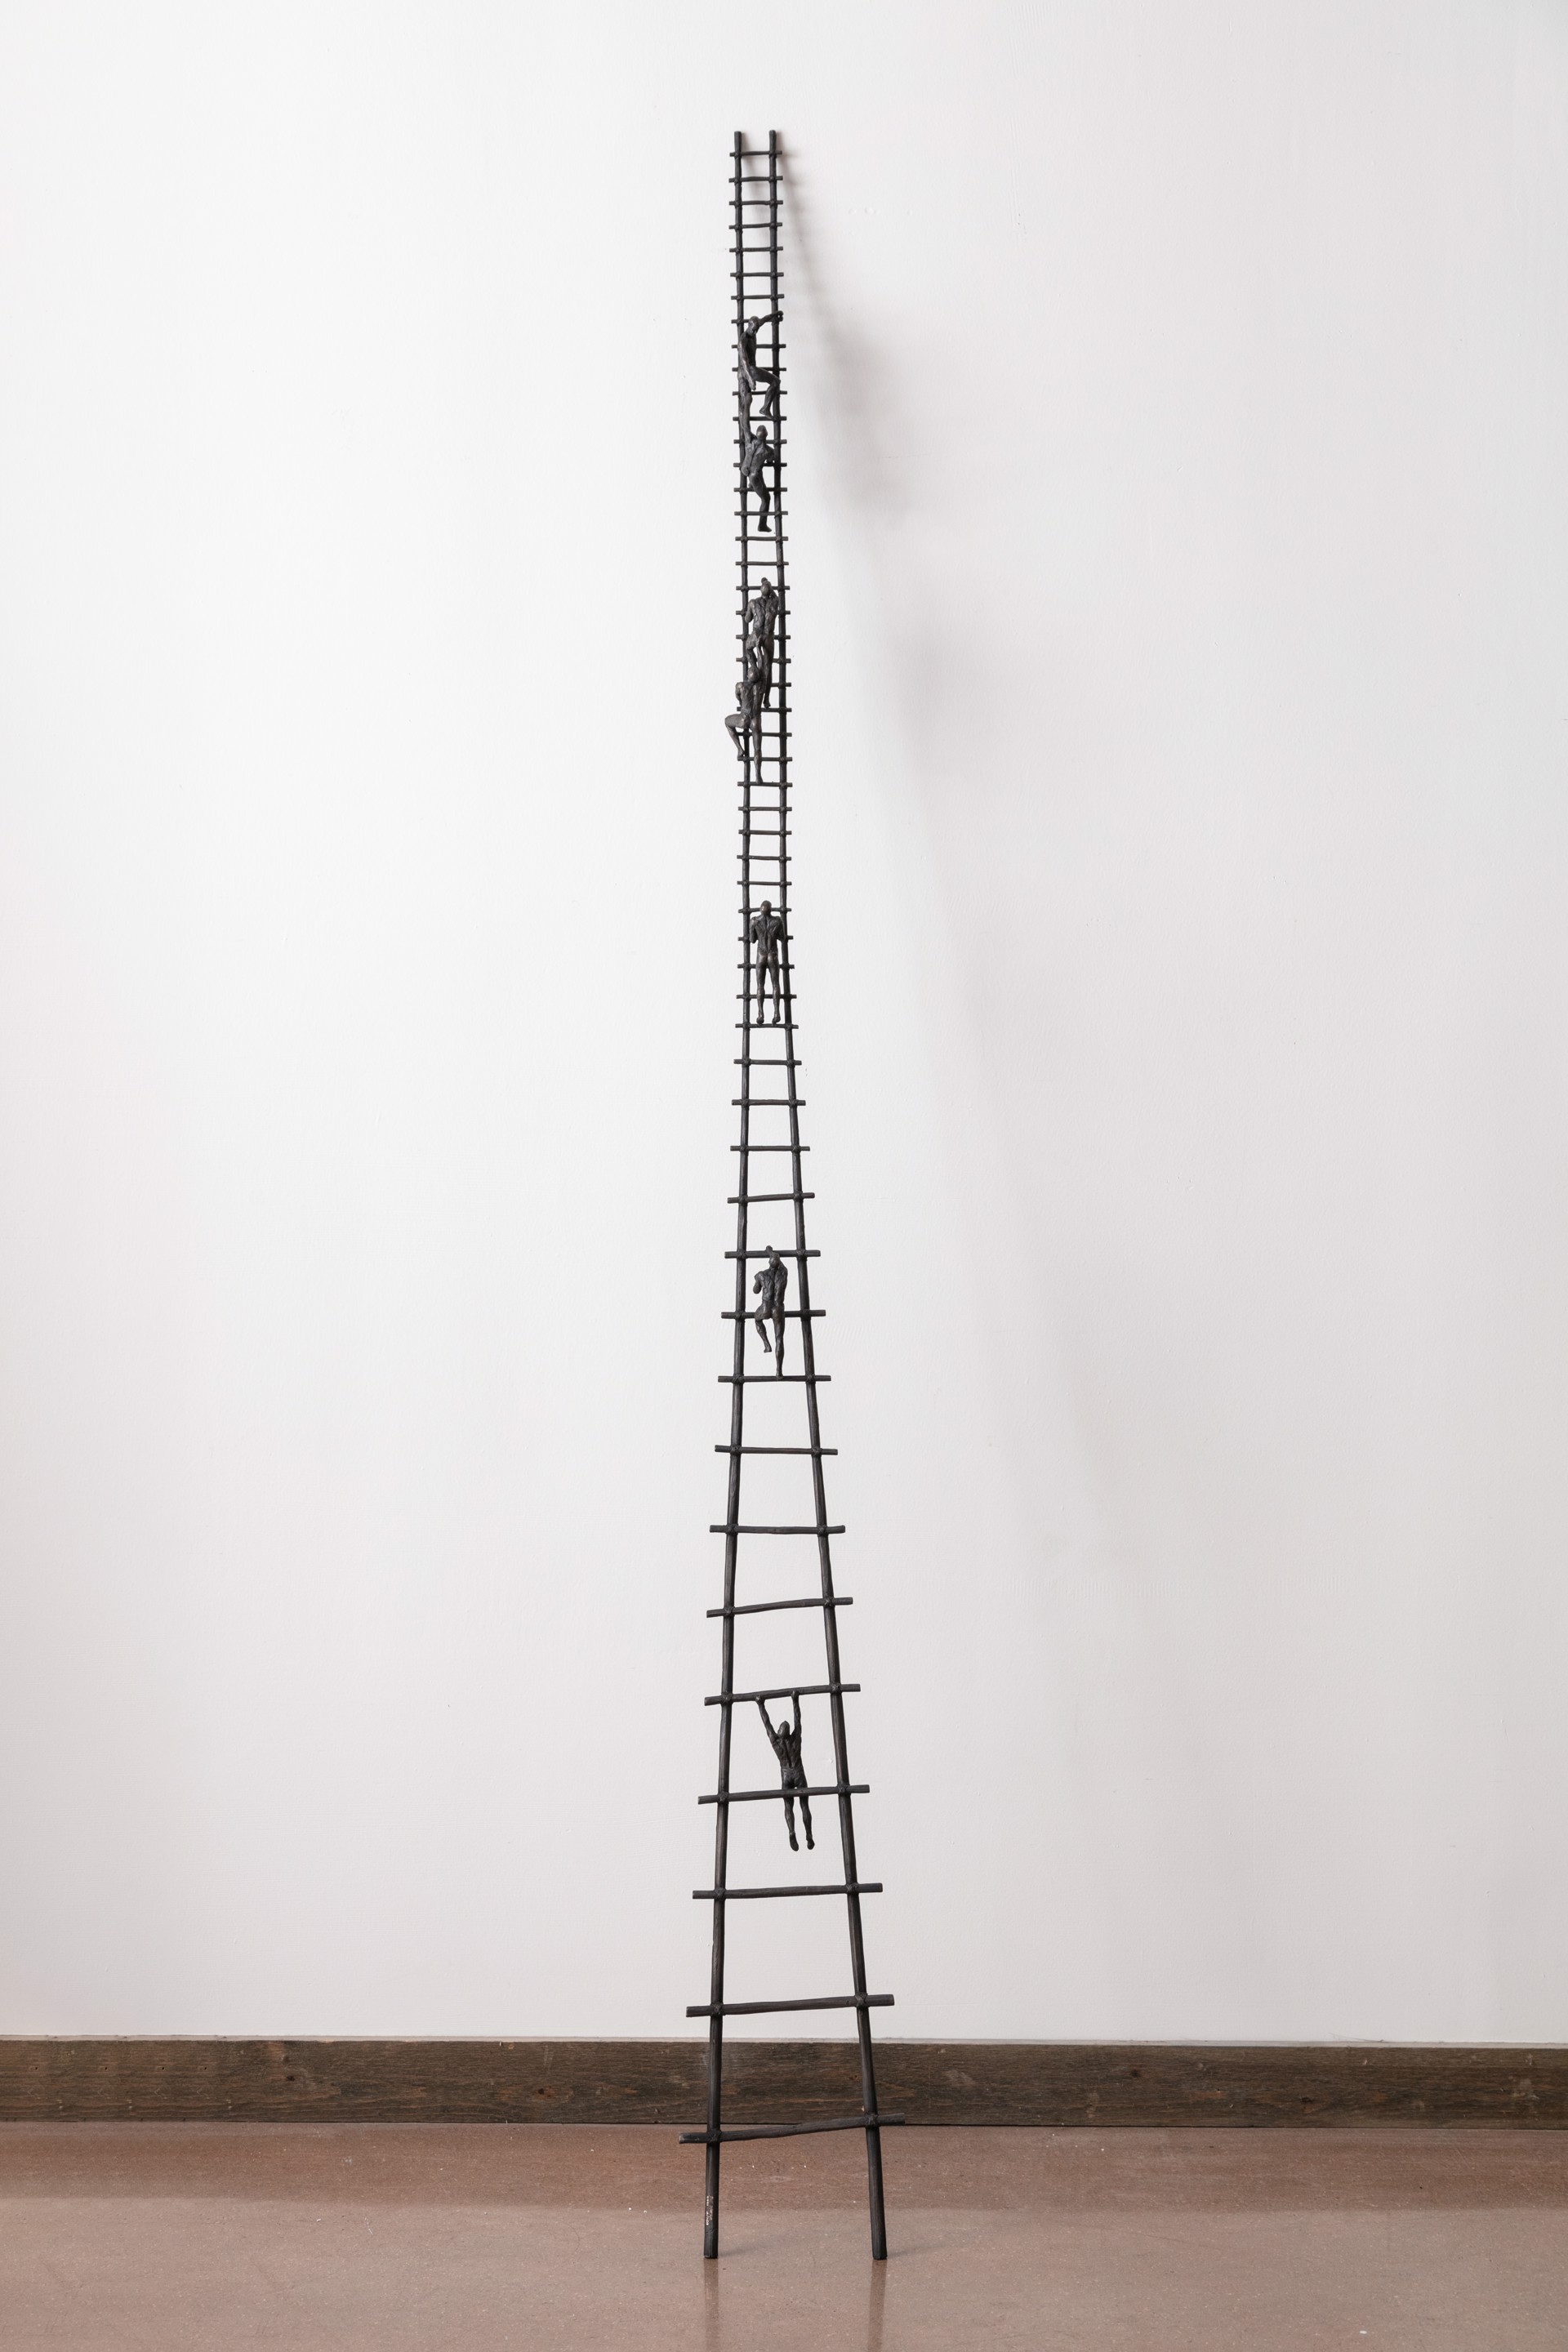 Climbers: The Ladder II by Bill Starke